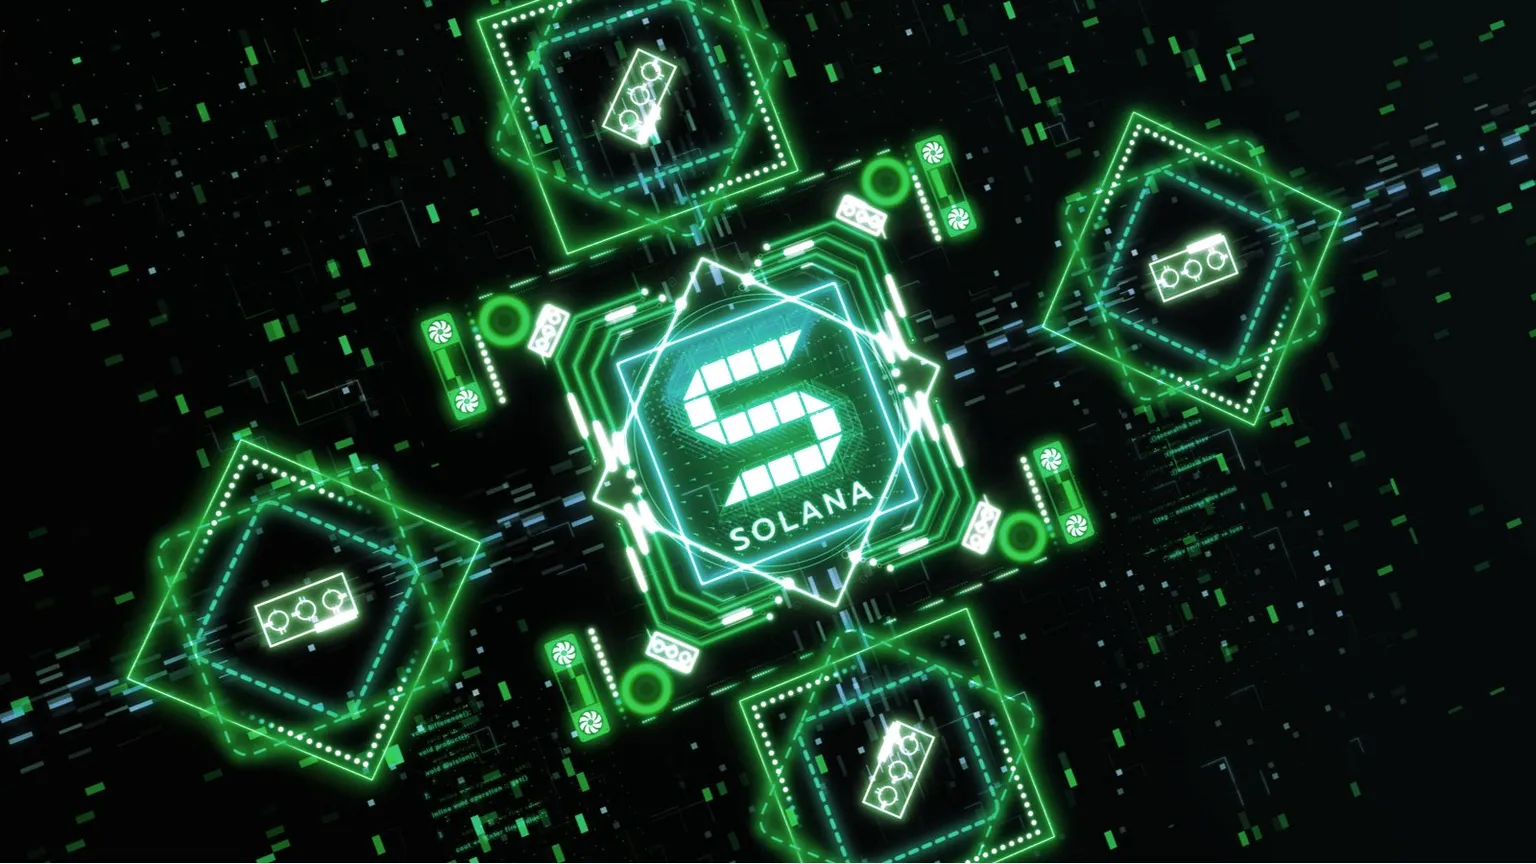 Solana blockchain. Image: Shutterstock